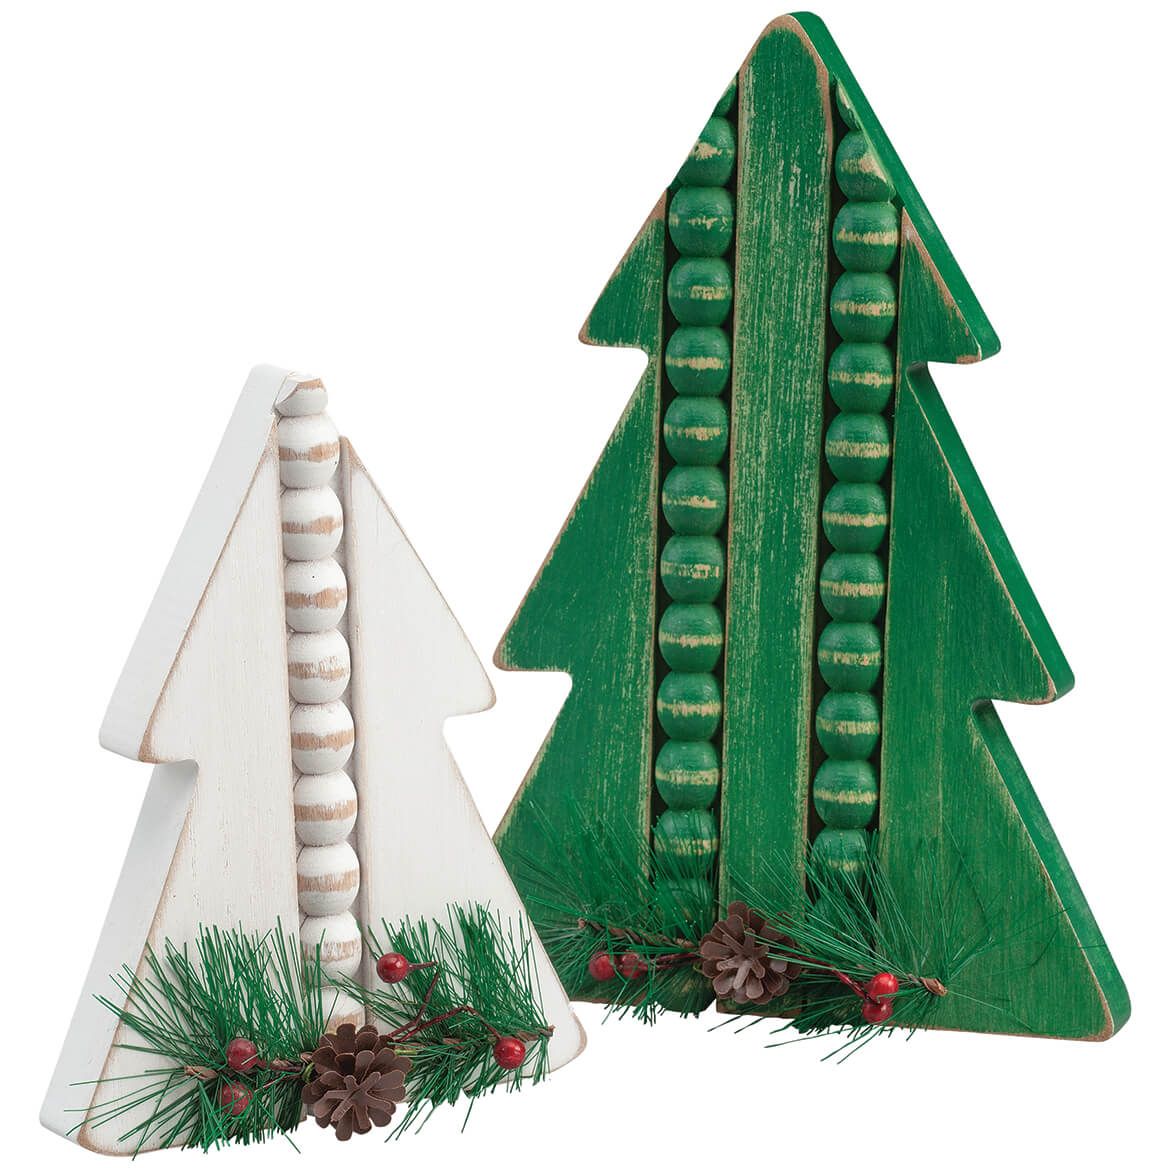 Wood Christmas Trees by Holiday Peak™, Set of 2 + '-' + 373859